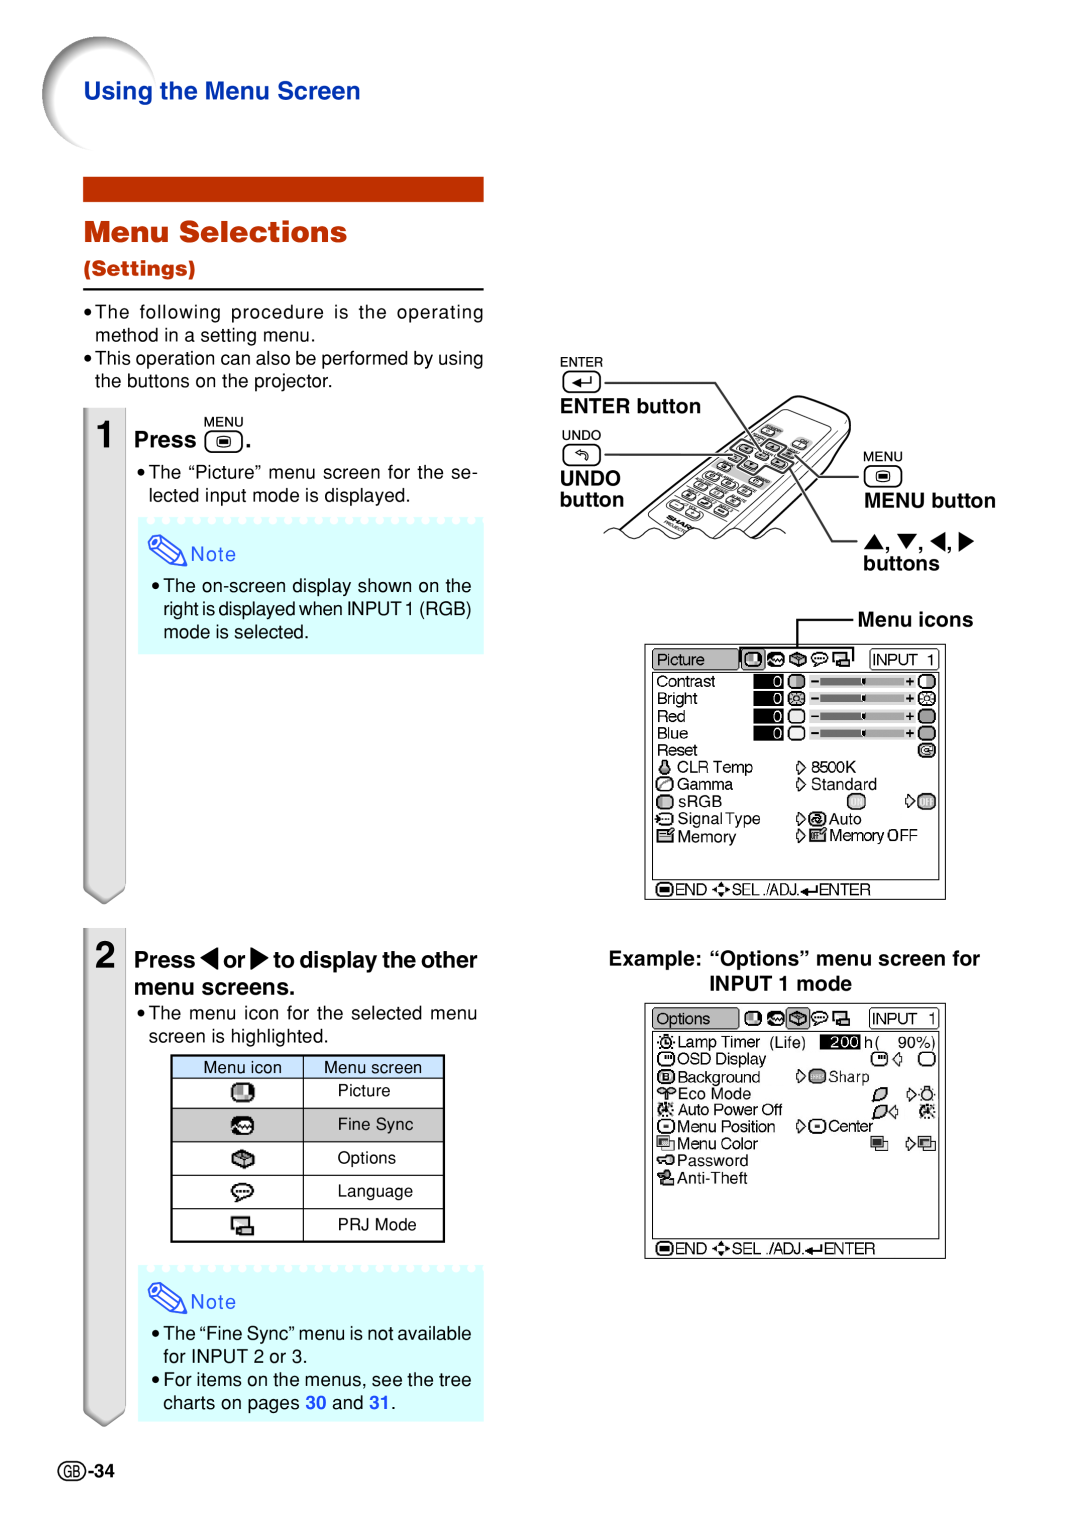 Sharp PG-B10S Using the Menu Screen, Settings, Example “Options” menu screen for INPUT 1 mode, Menu Selections, Press 